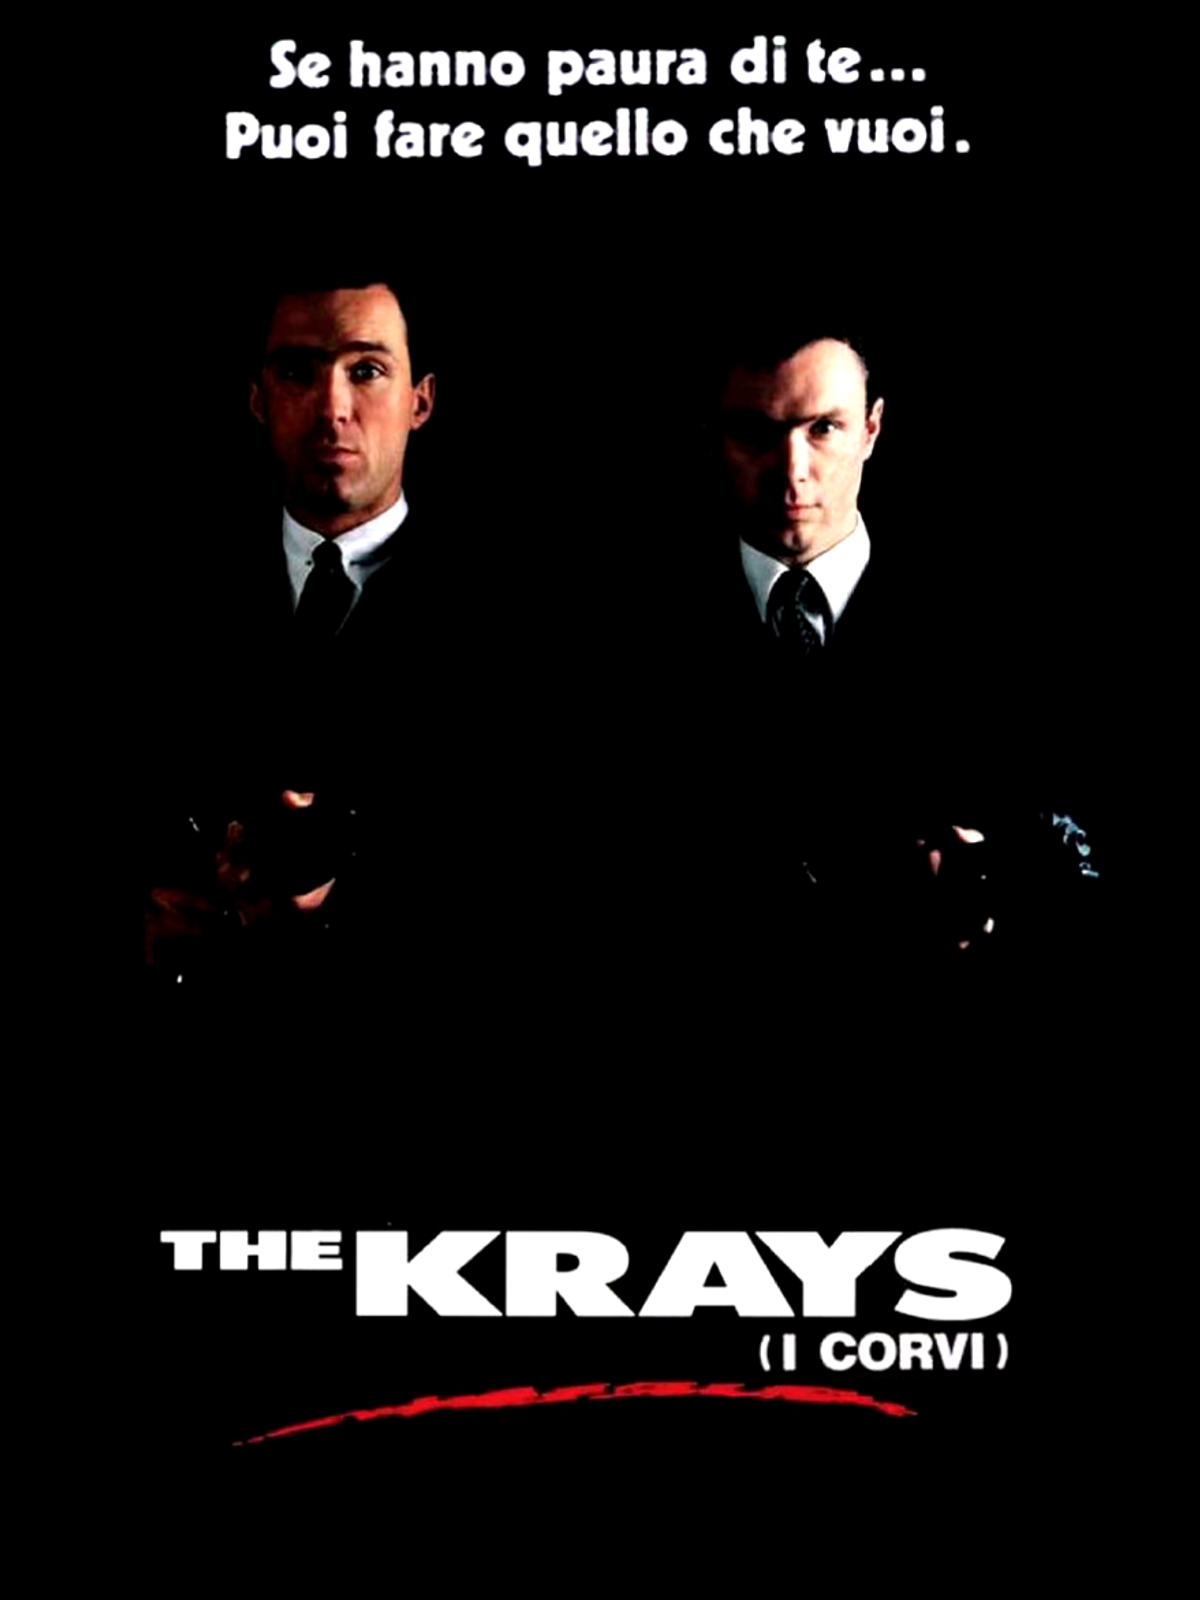 The Krays – I corvi (1990)